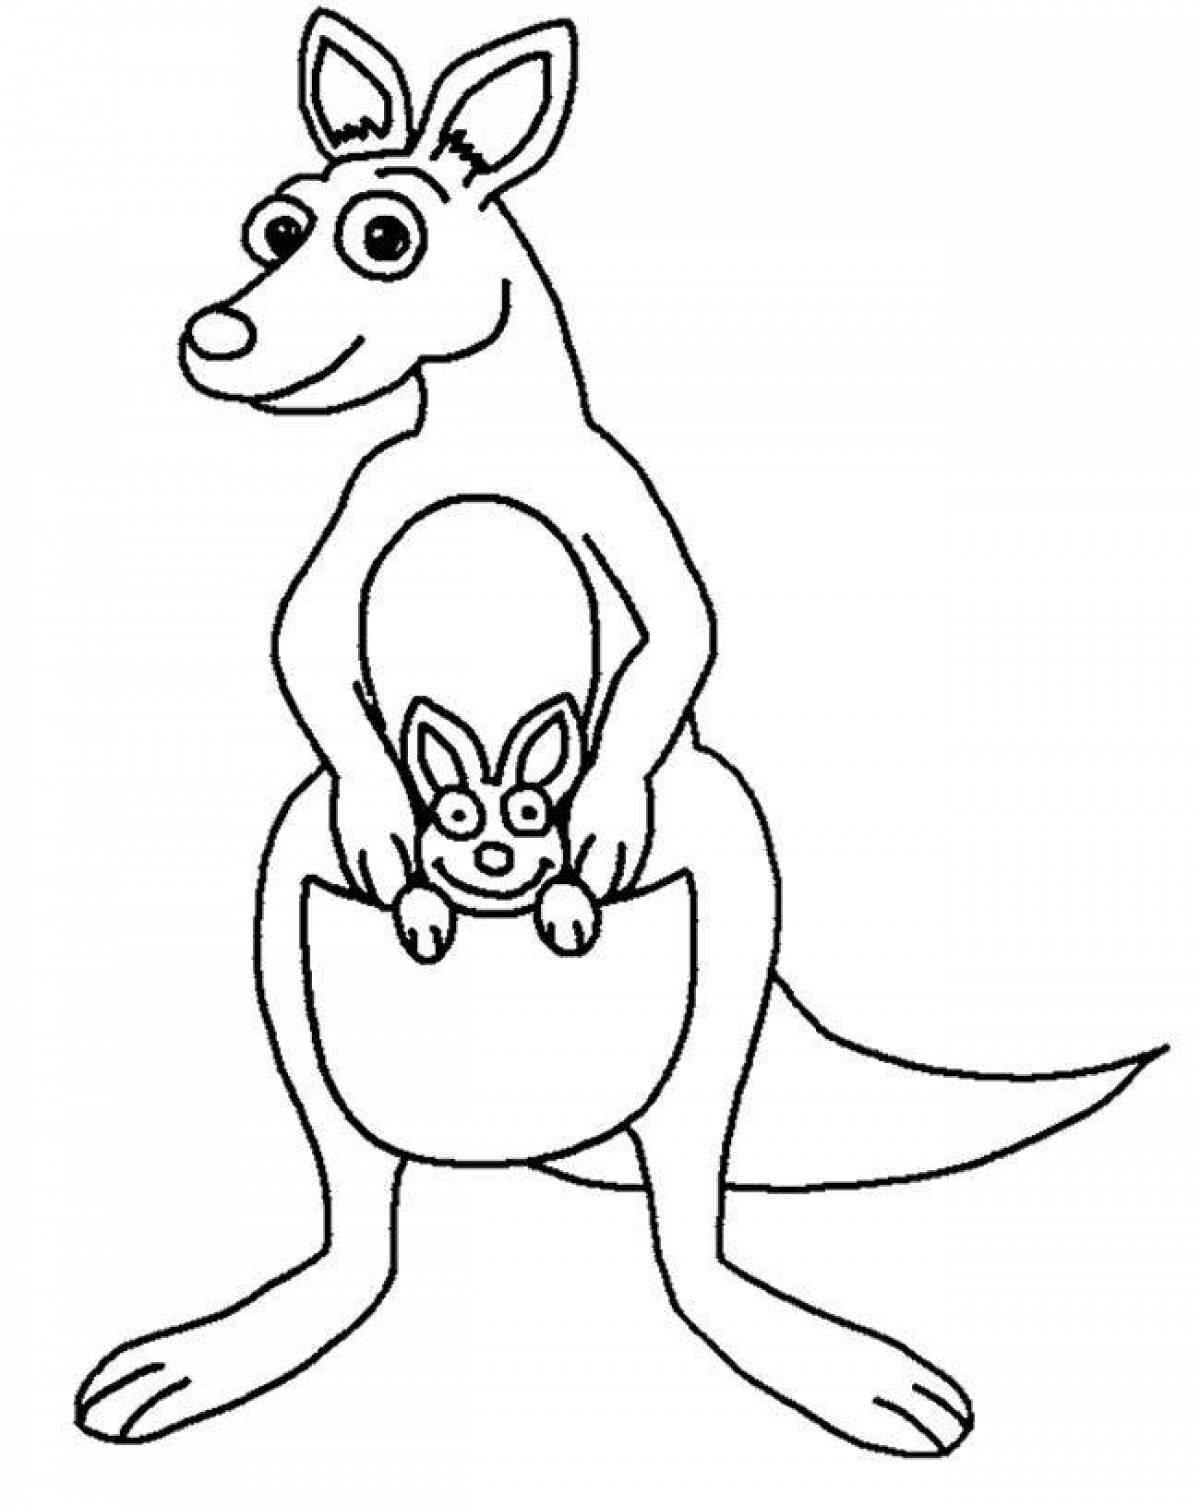 A fun kangaroo coloring book for kids